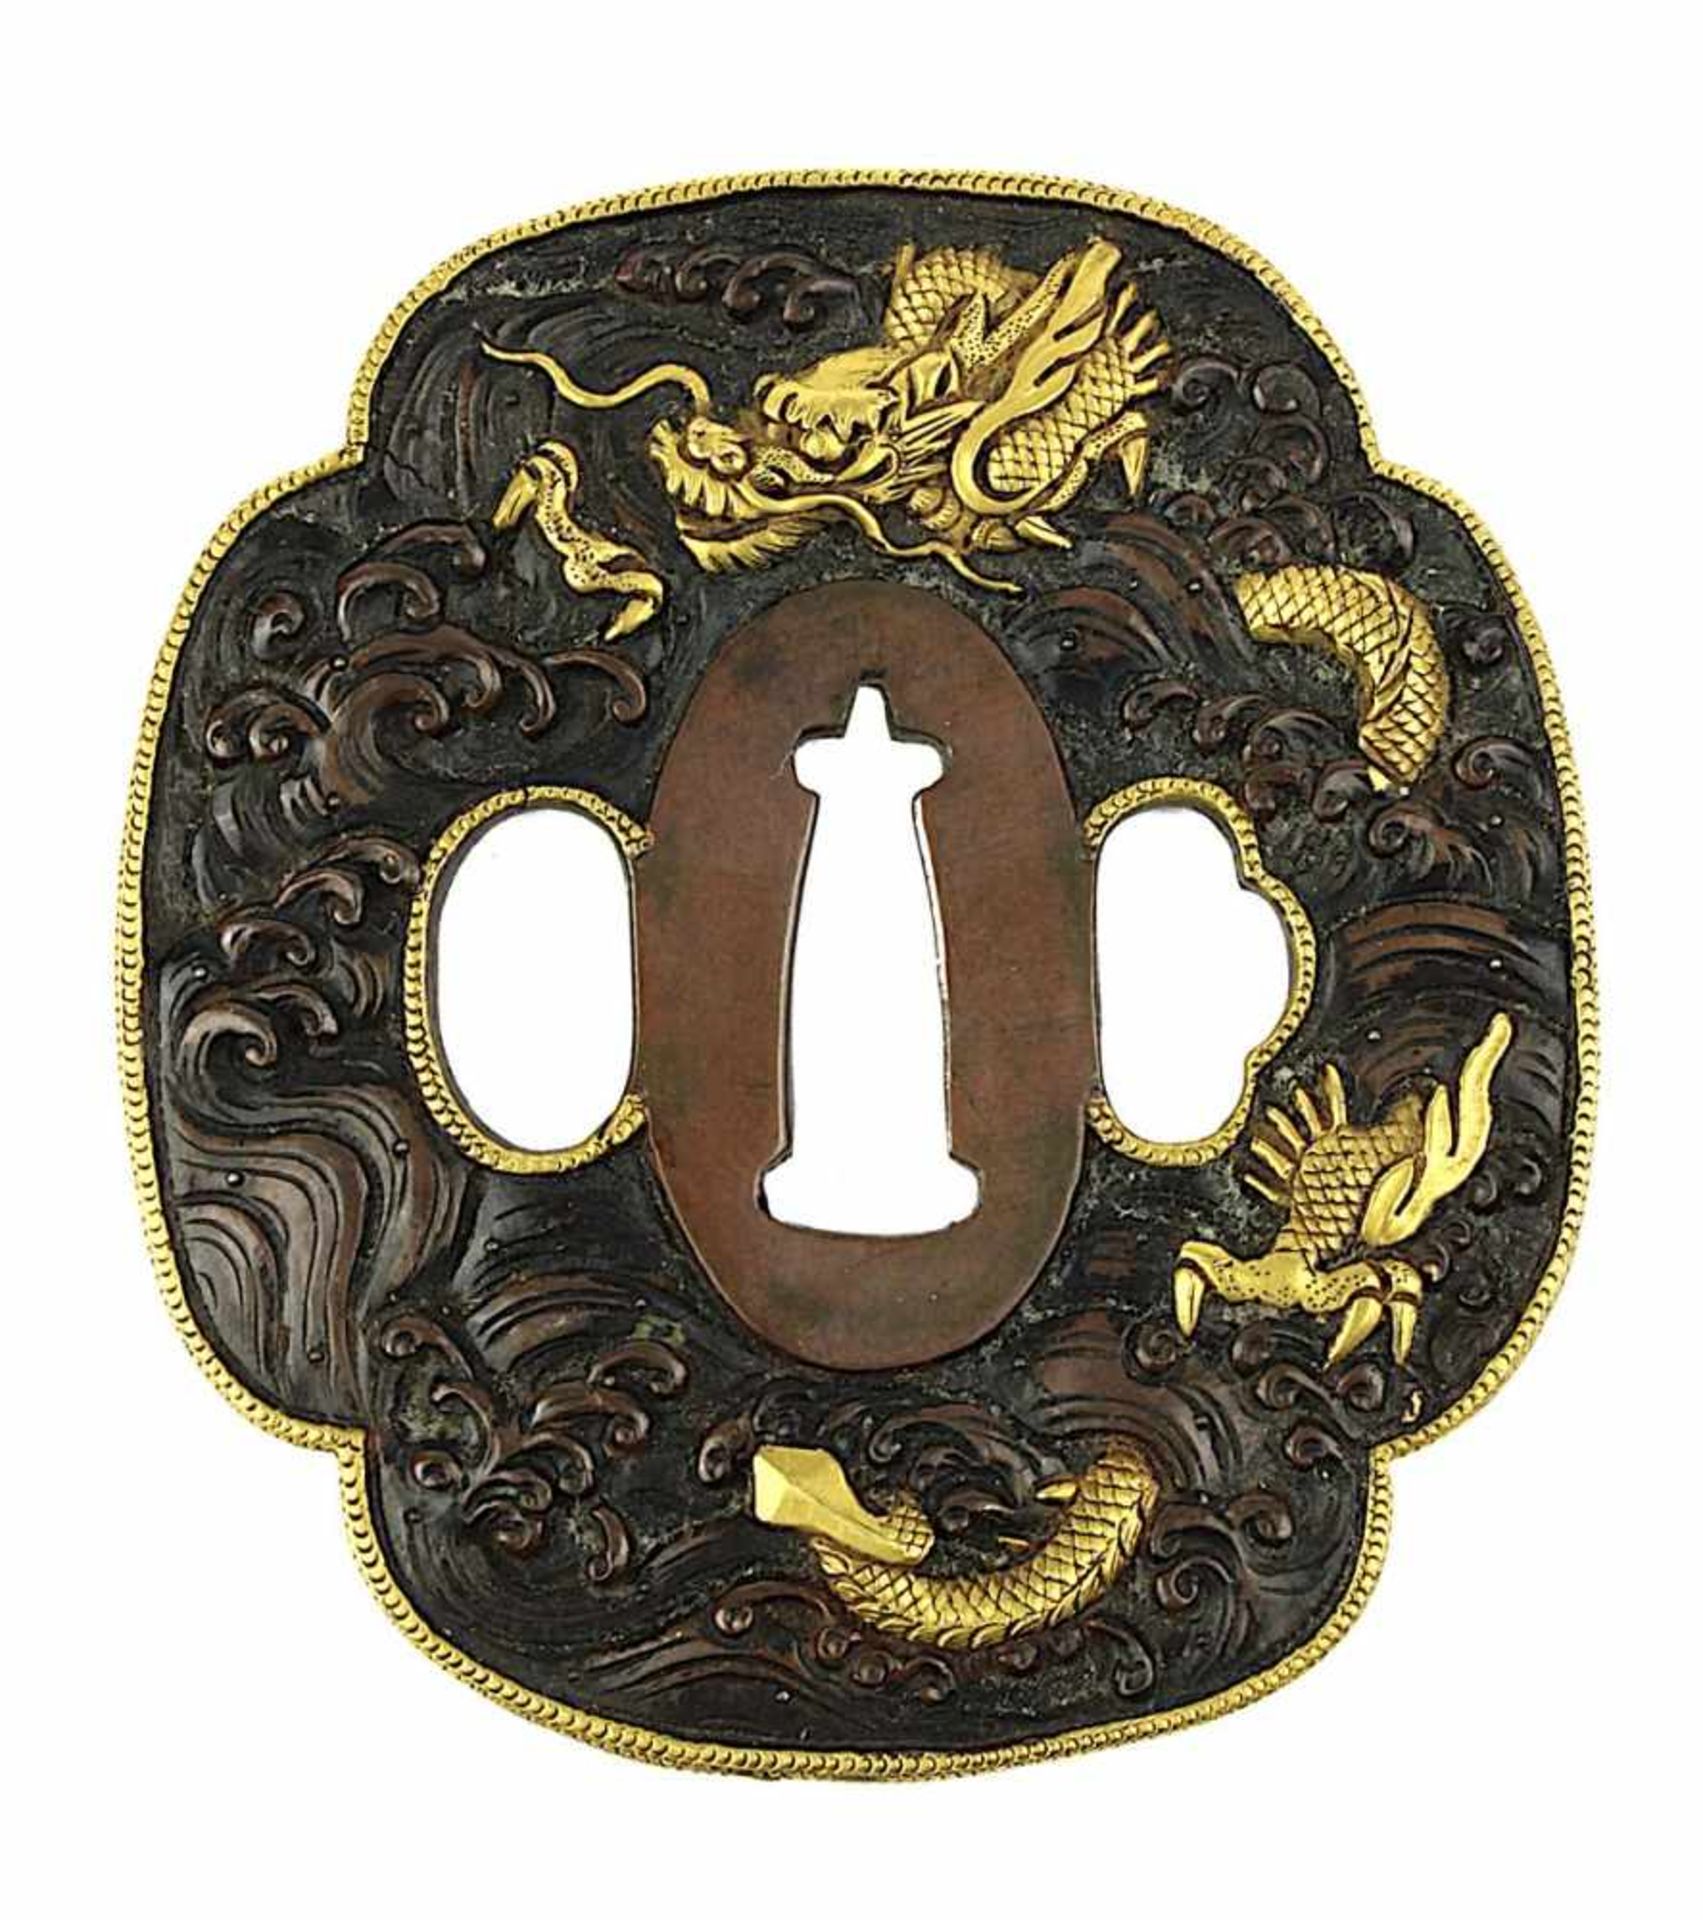 Tsuba mit Drachenmotiv, Bronze, Japan Meiji-Periode, Ende 19. Jh., vierpassige Form, qualitätvolle